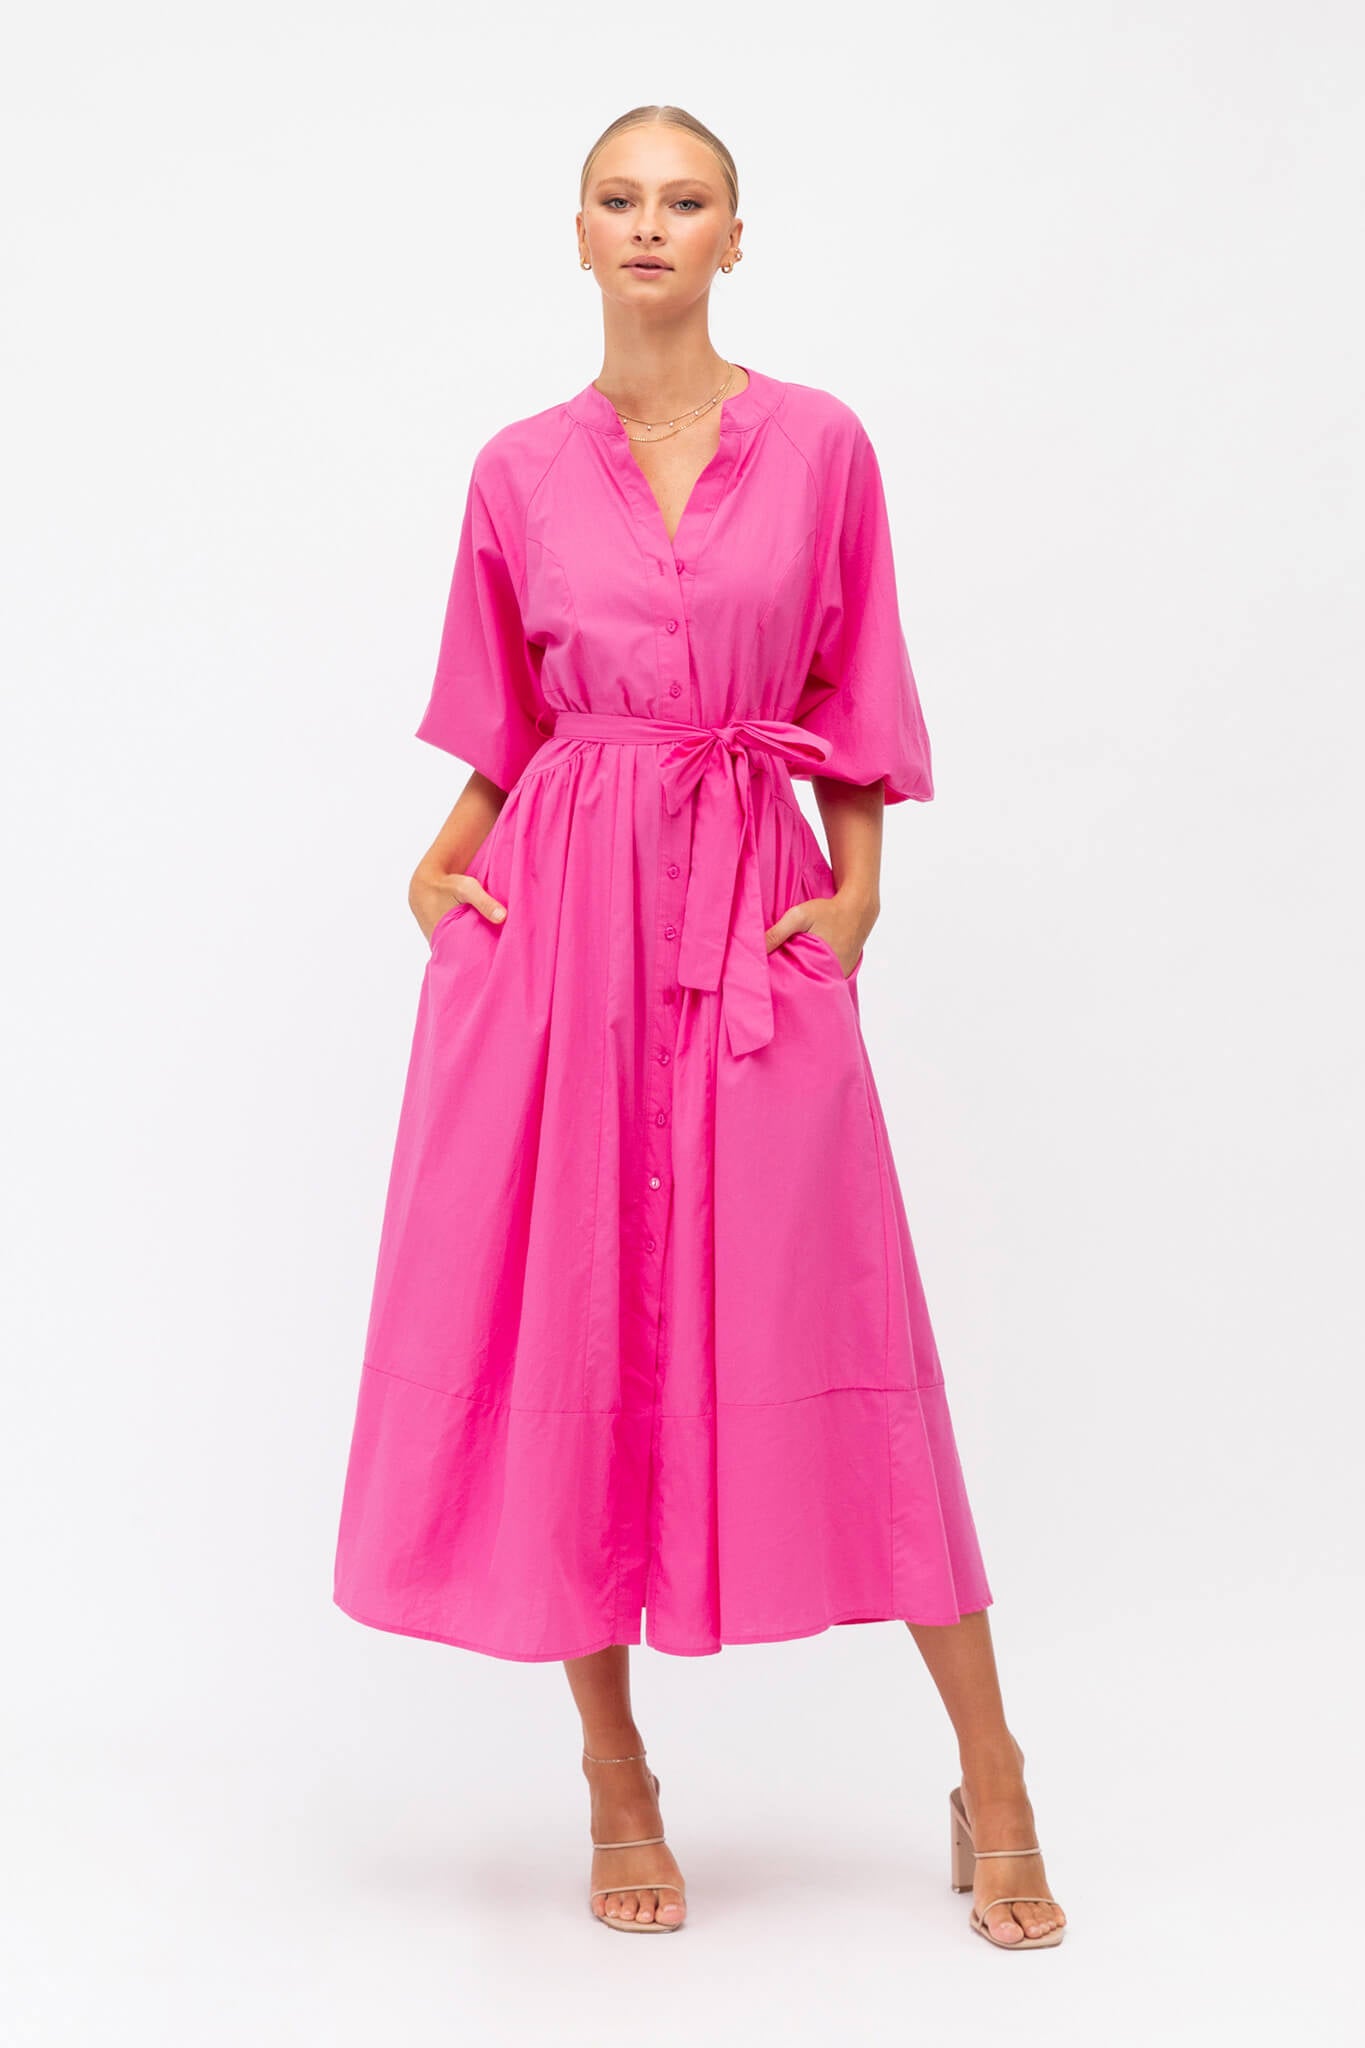 Entice Midi Dress In Hot Pink - full length